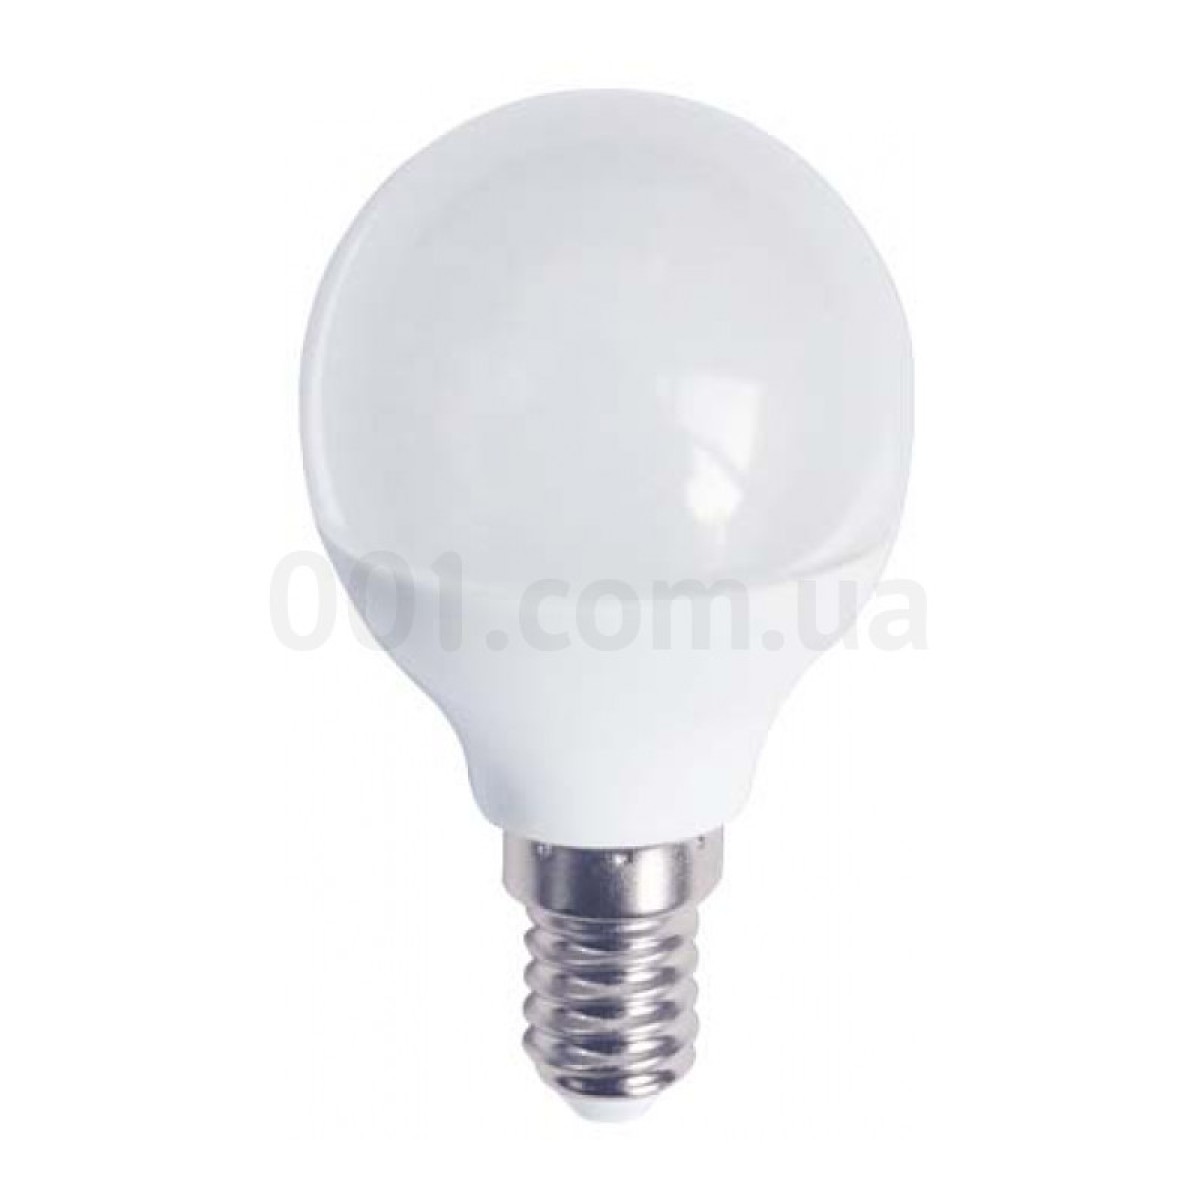 Светодиодная лампа LB-745 P45 (шар) 6Вт 2700K E14, Feron 256_256.jpg